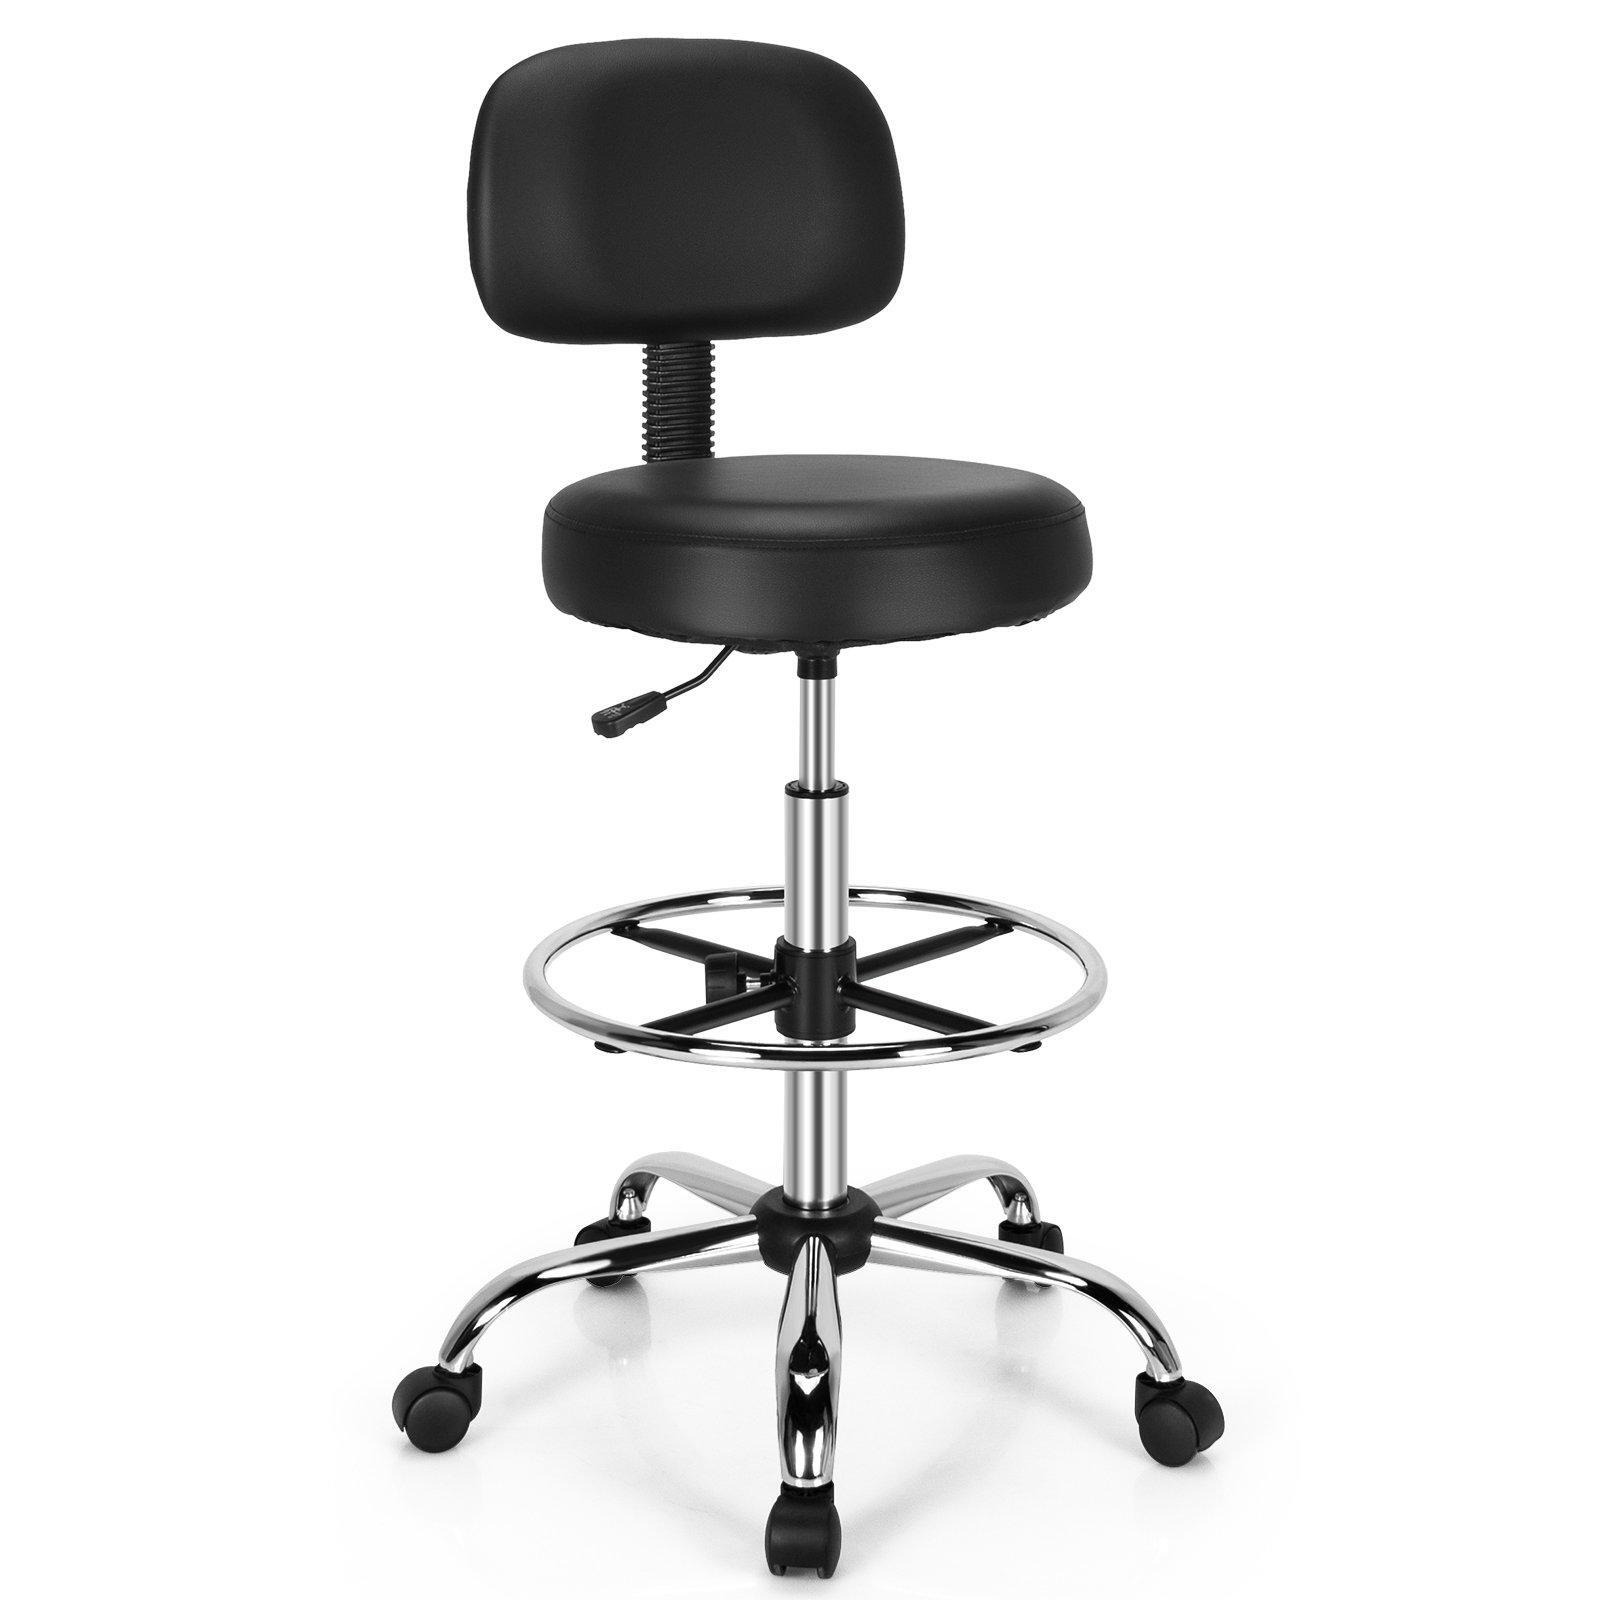 Ergonomic Drafting Chair Height Adjustable Stool Swivel Office Chair - image 1